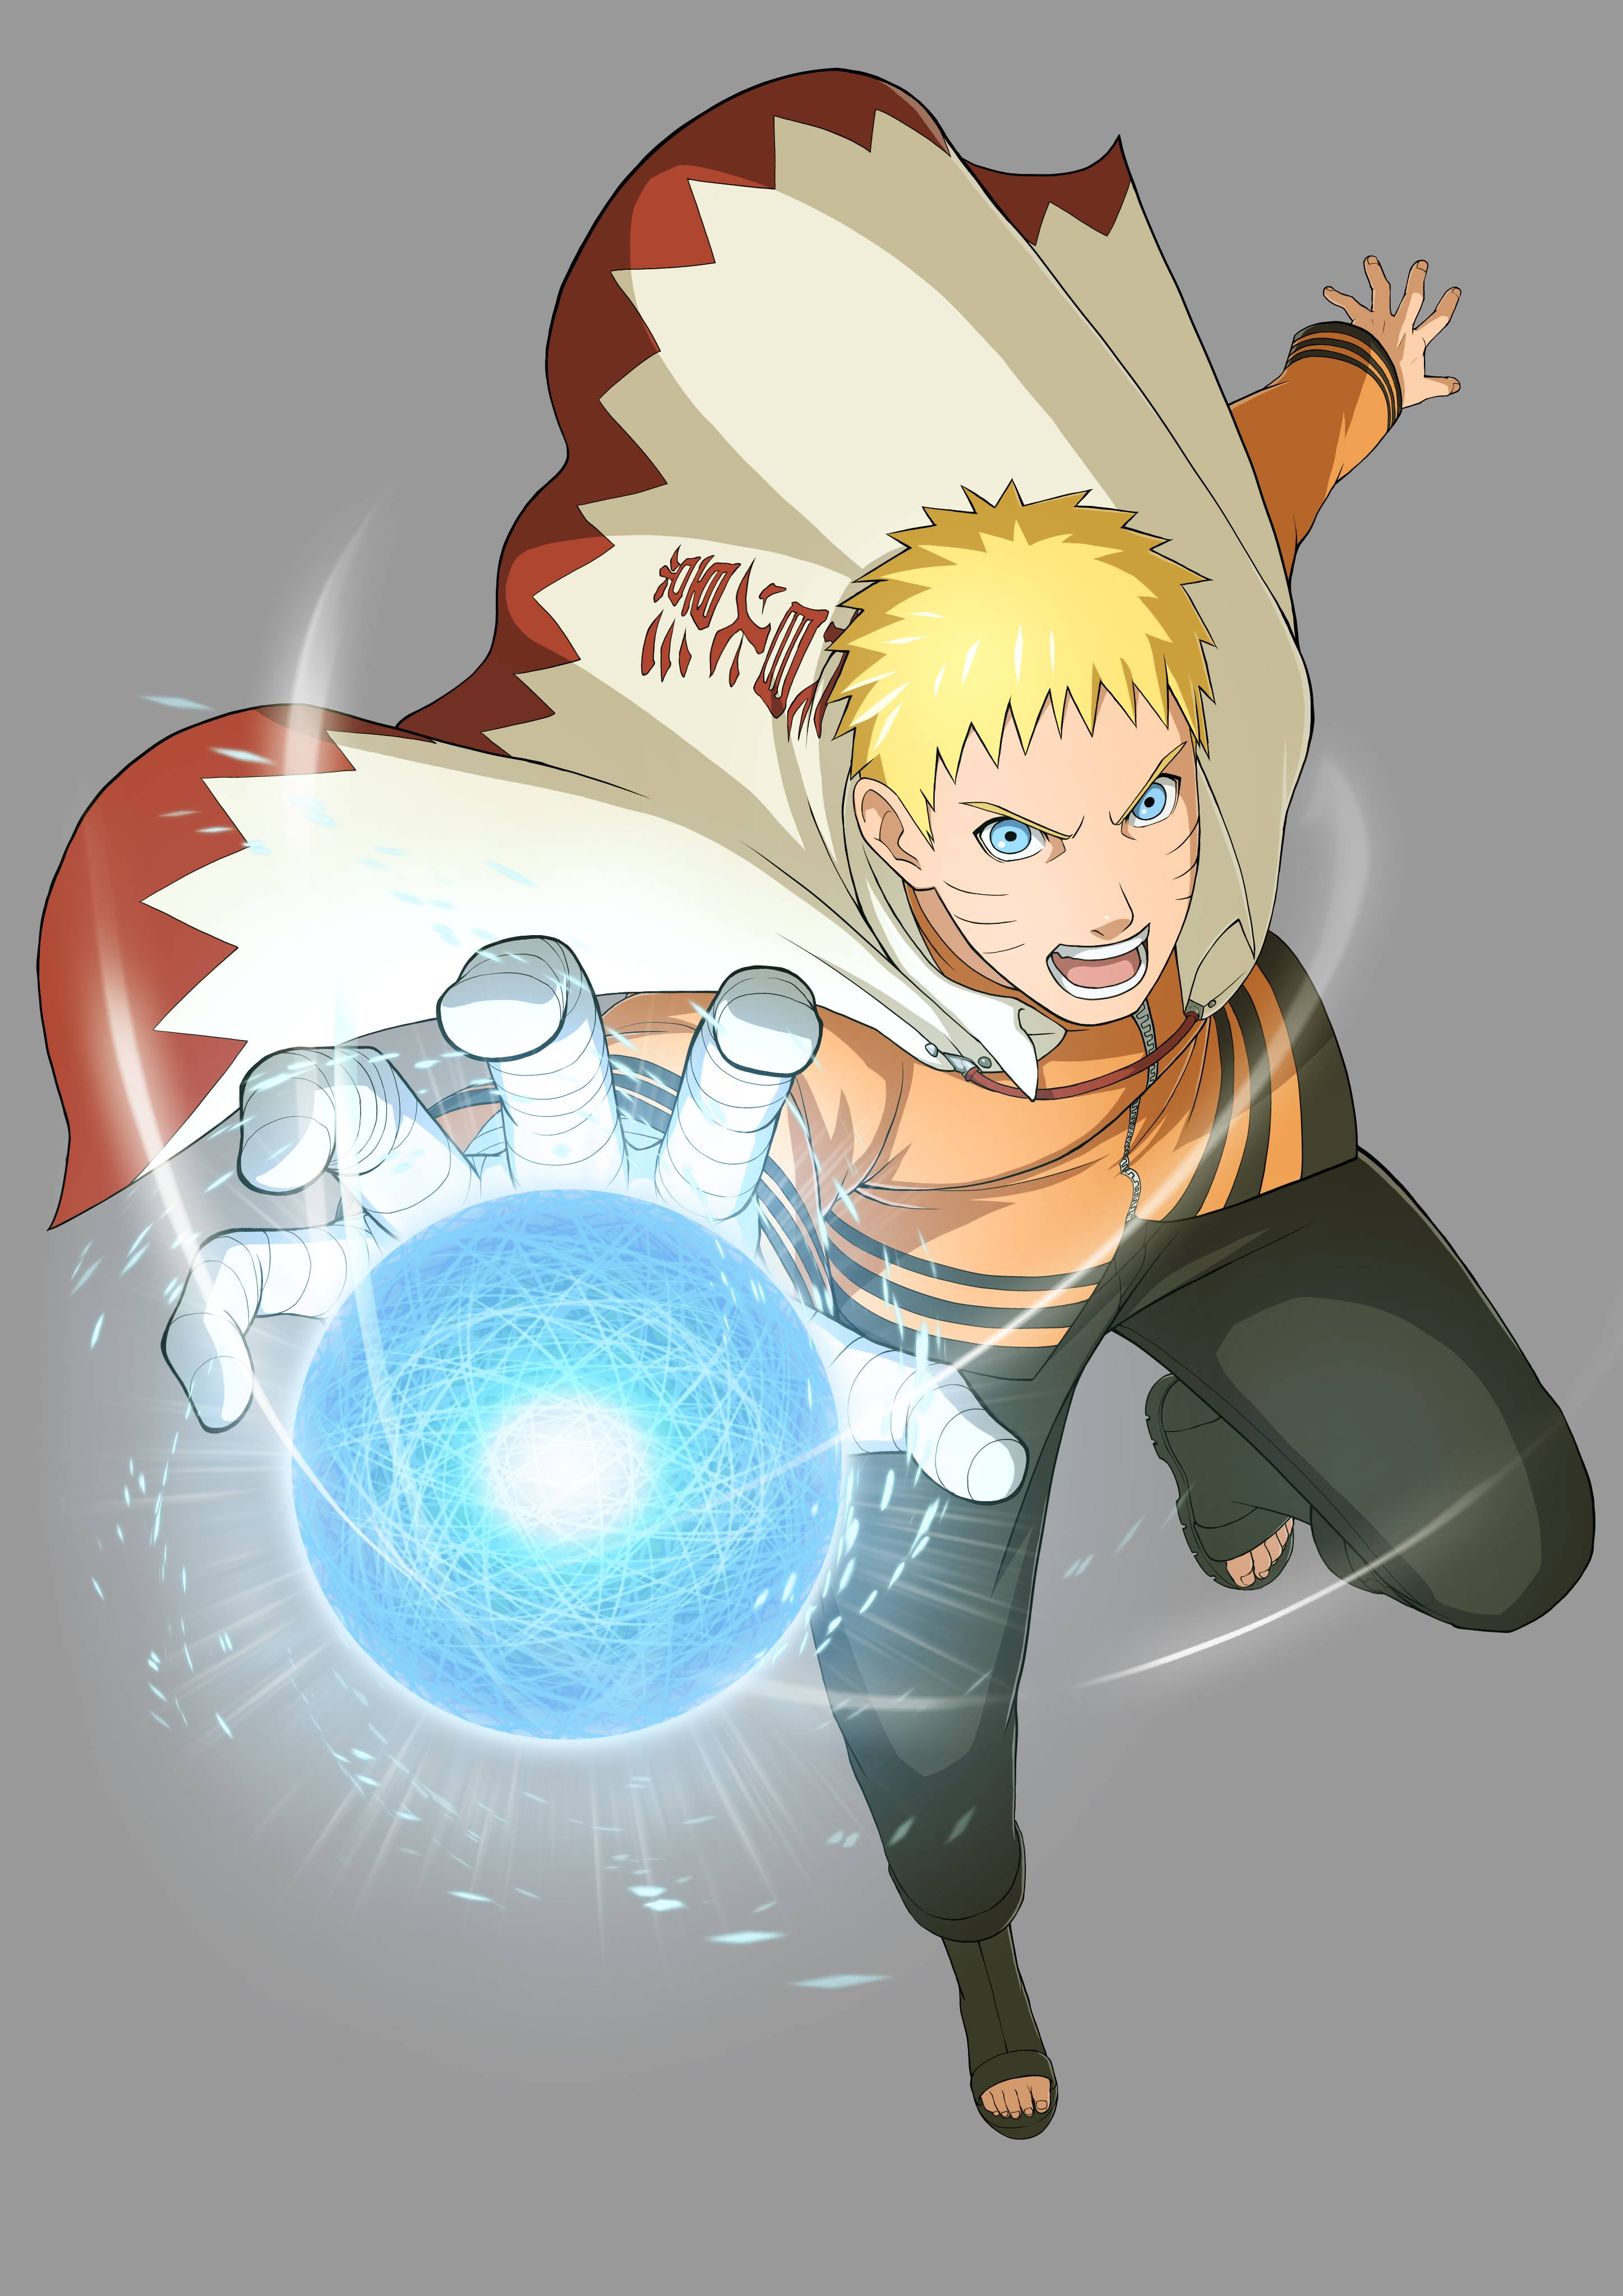 Hokage (Naruto) - Desktop Wallpapers, Phone Wallpaper, PFP, Gifs, and More!